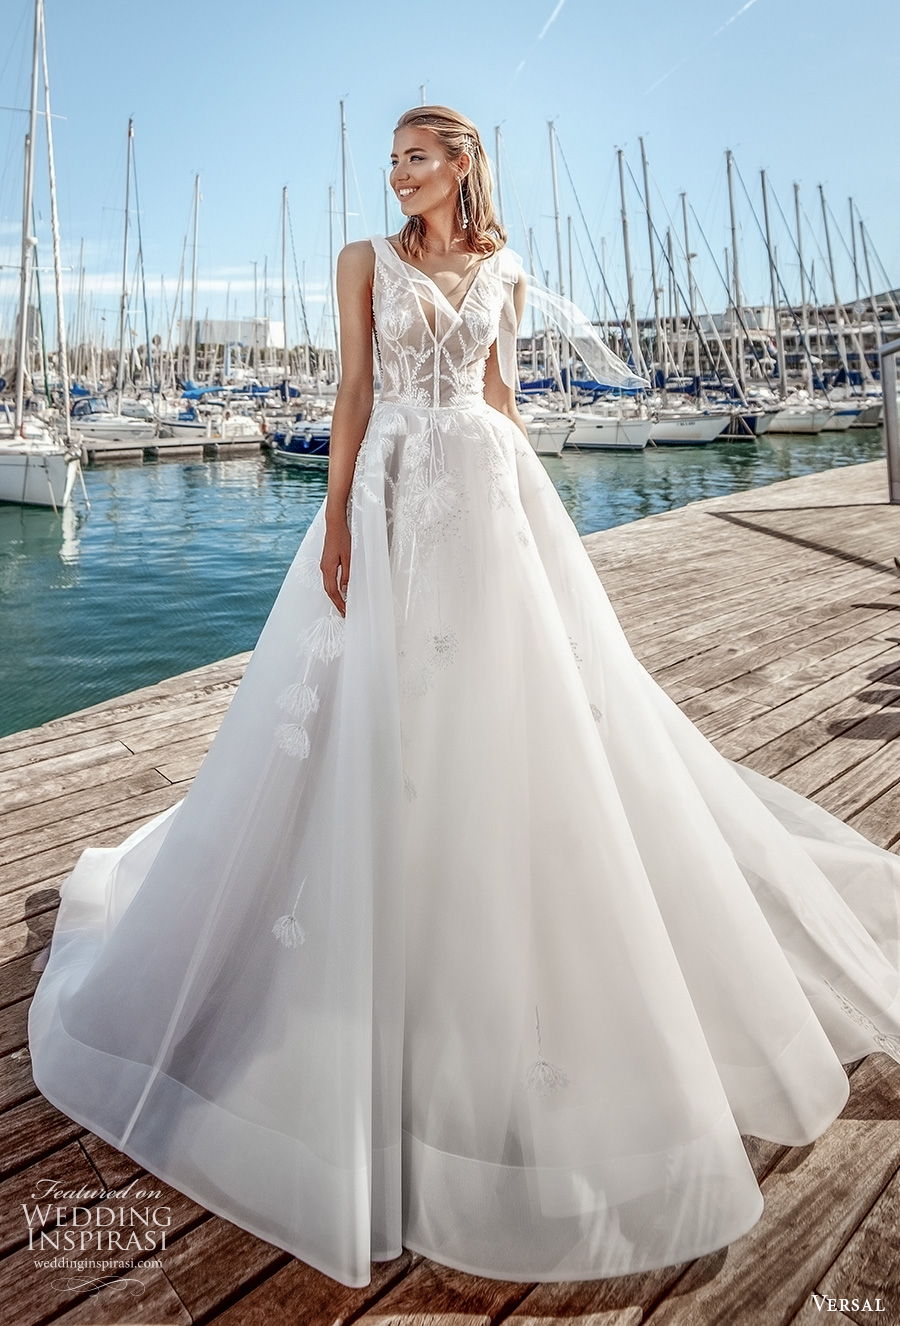 Versal Wedding Dress 2020 Bridal Collection | Wedding Inspirasi